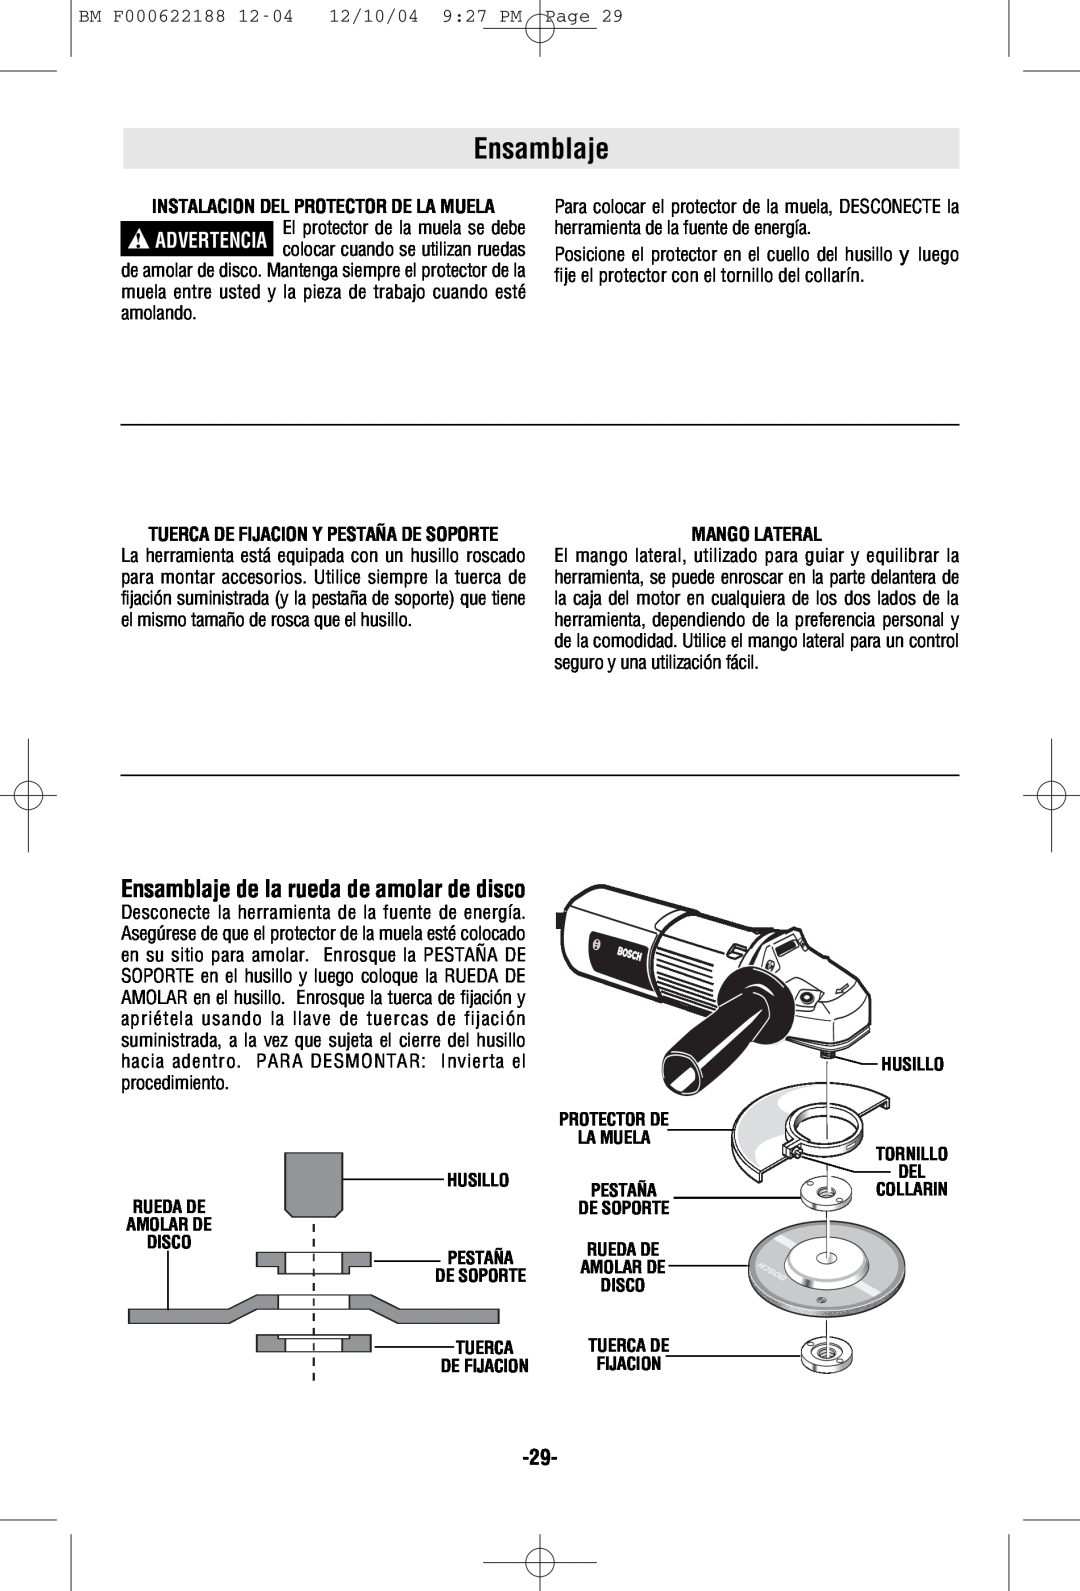 Bosch Power Tools 1347A, 1348AE manual Ensamblaje de la rueda de amolar de disco, Mango Lateral 